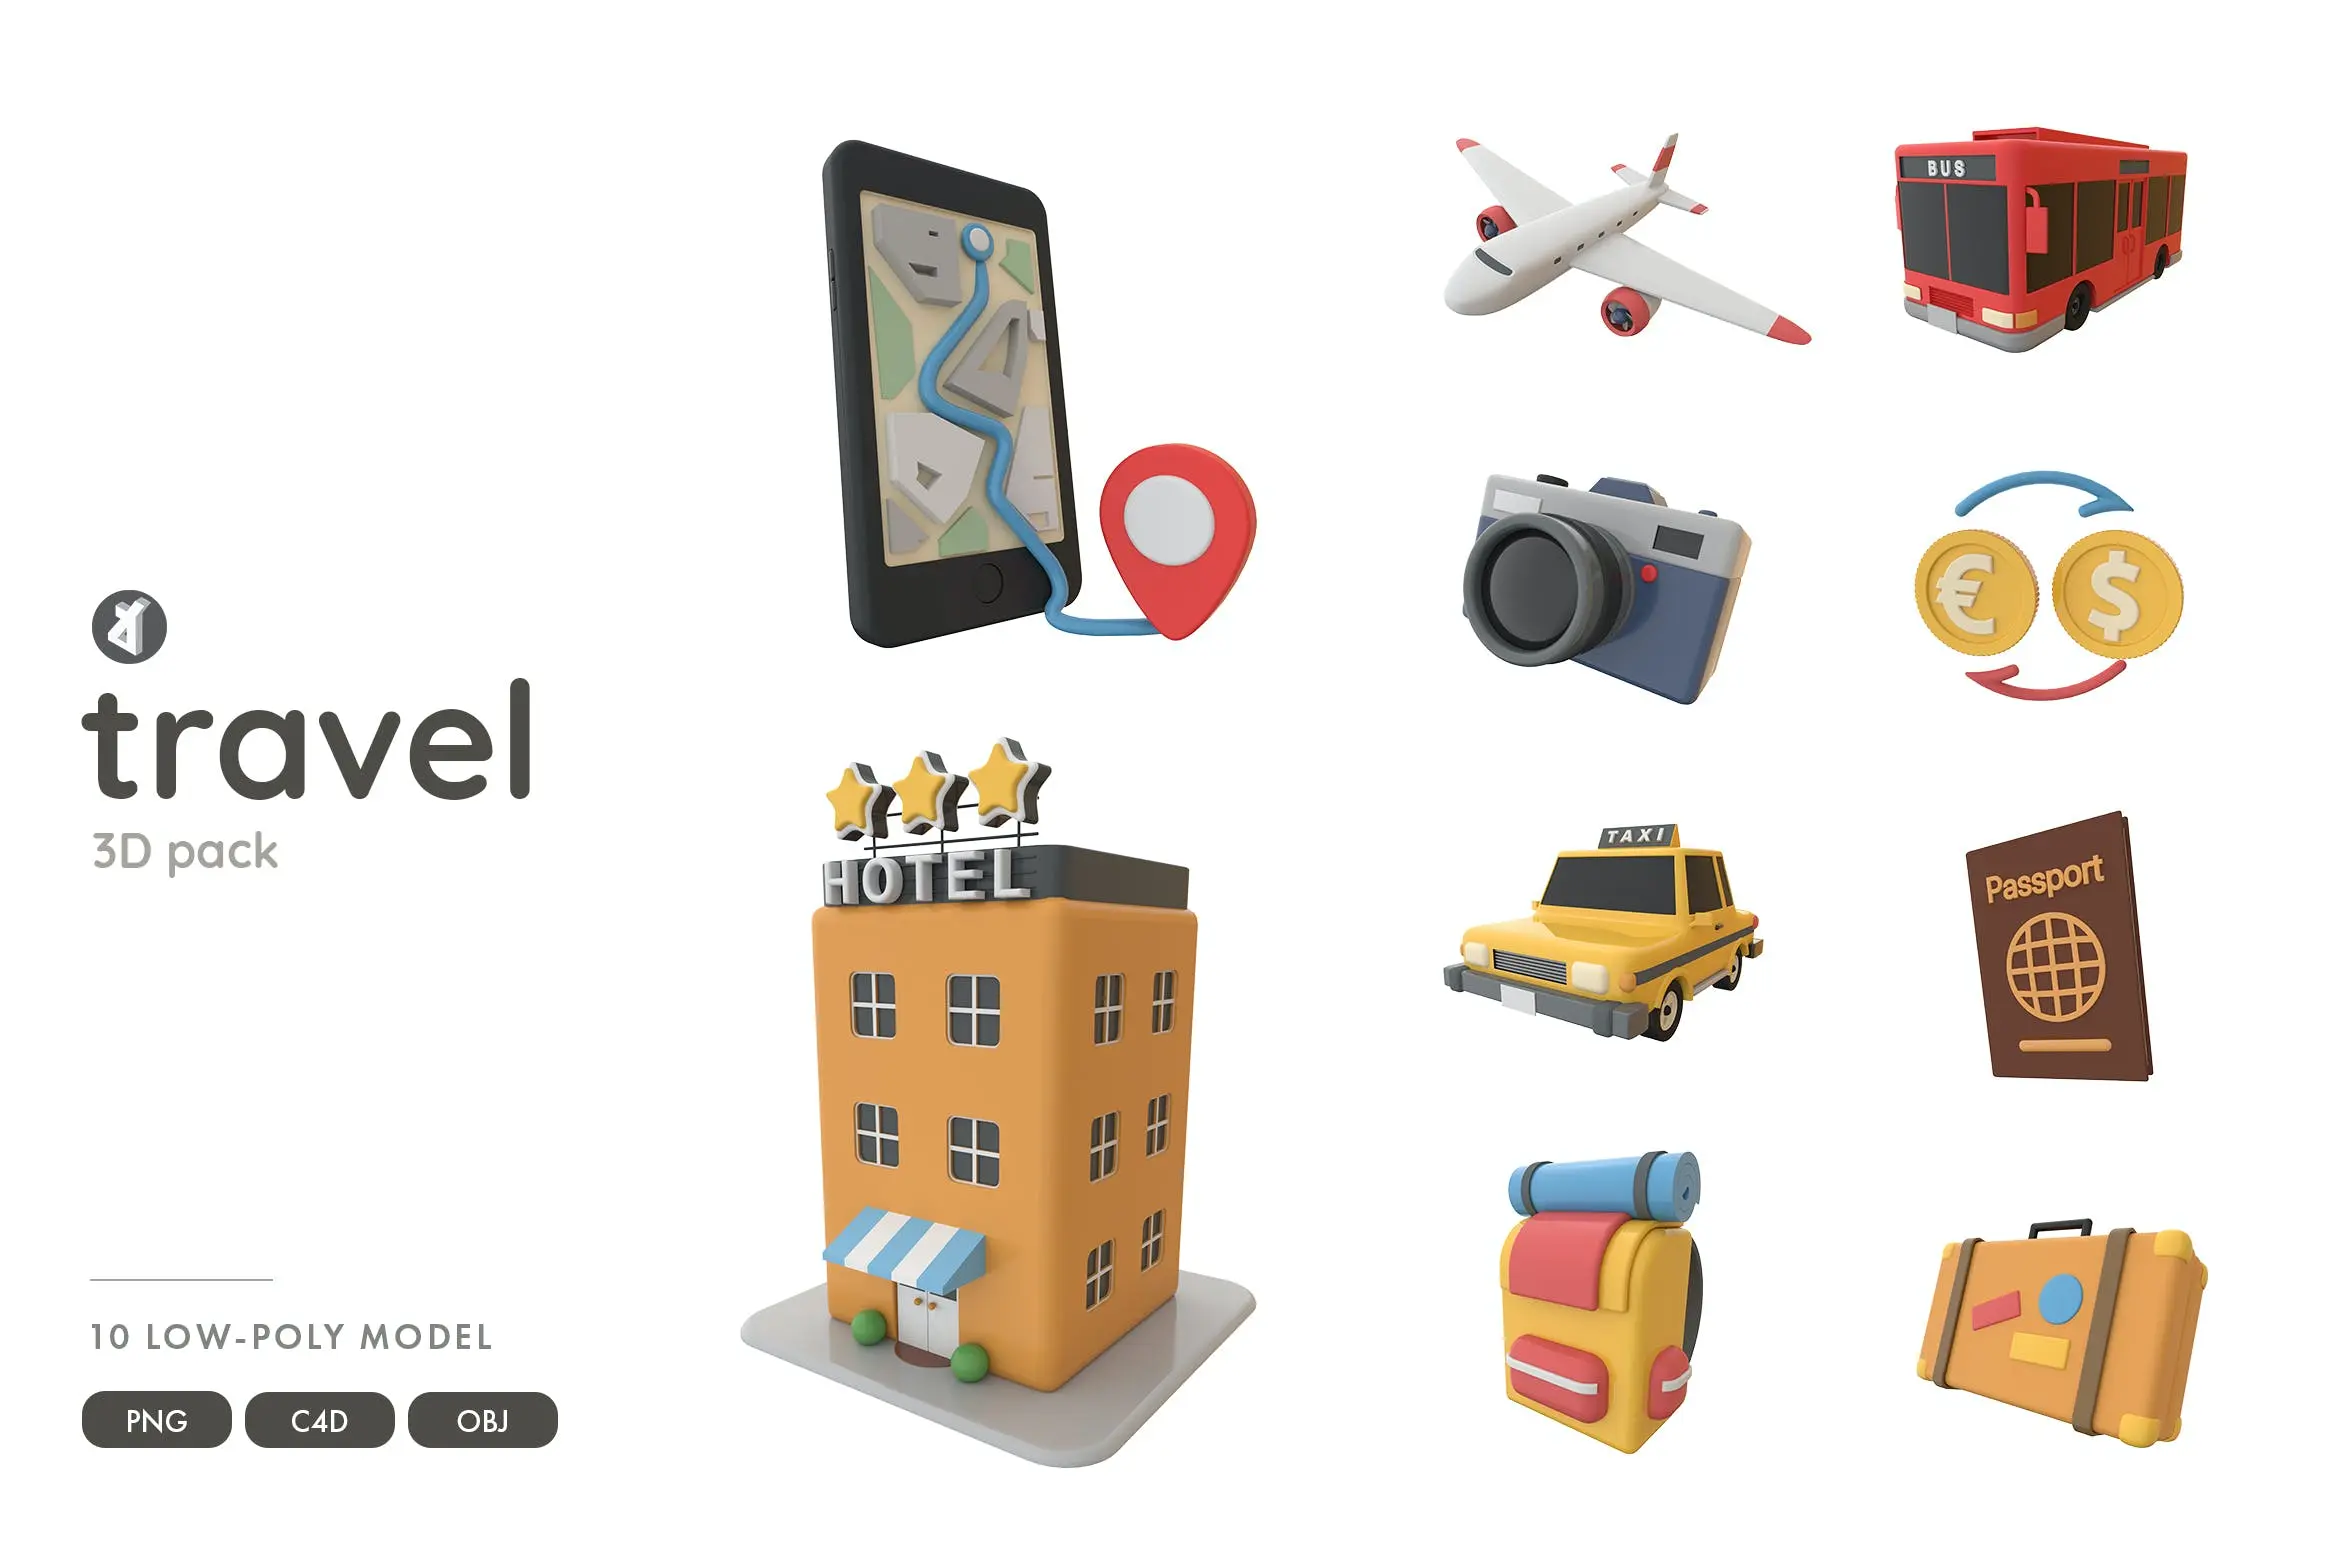 3D模型低多边形风格旅行3D元素插画包 Travel 3D object illustration pack